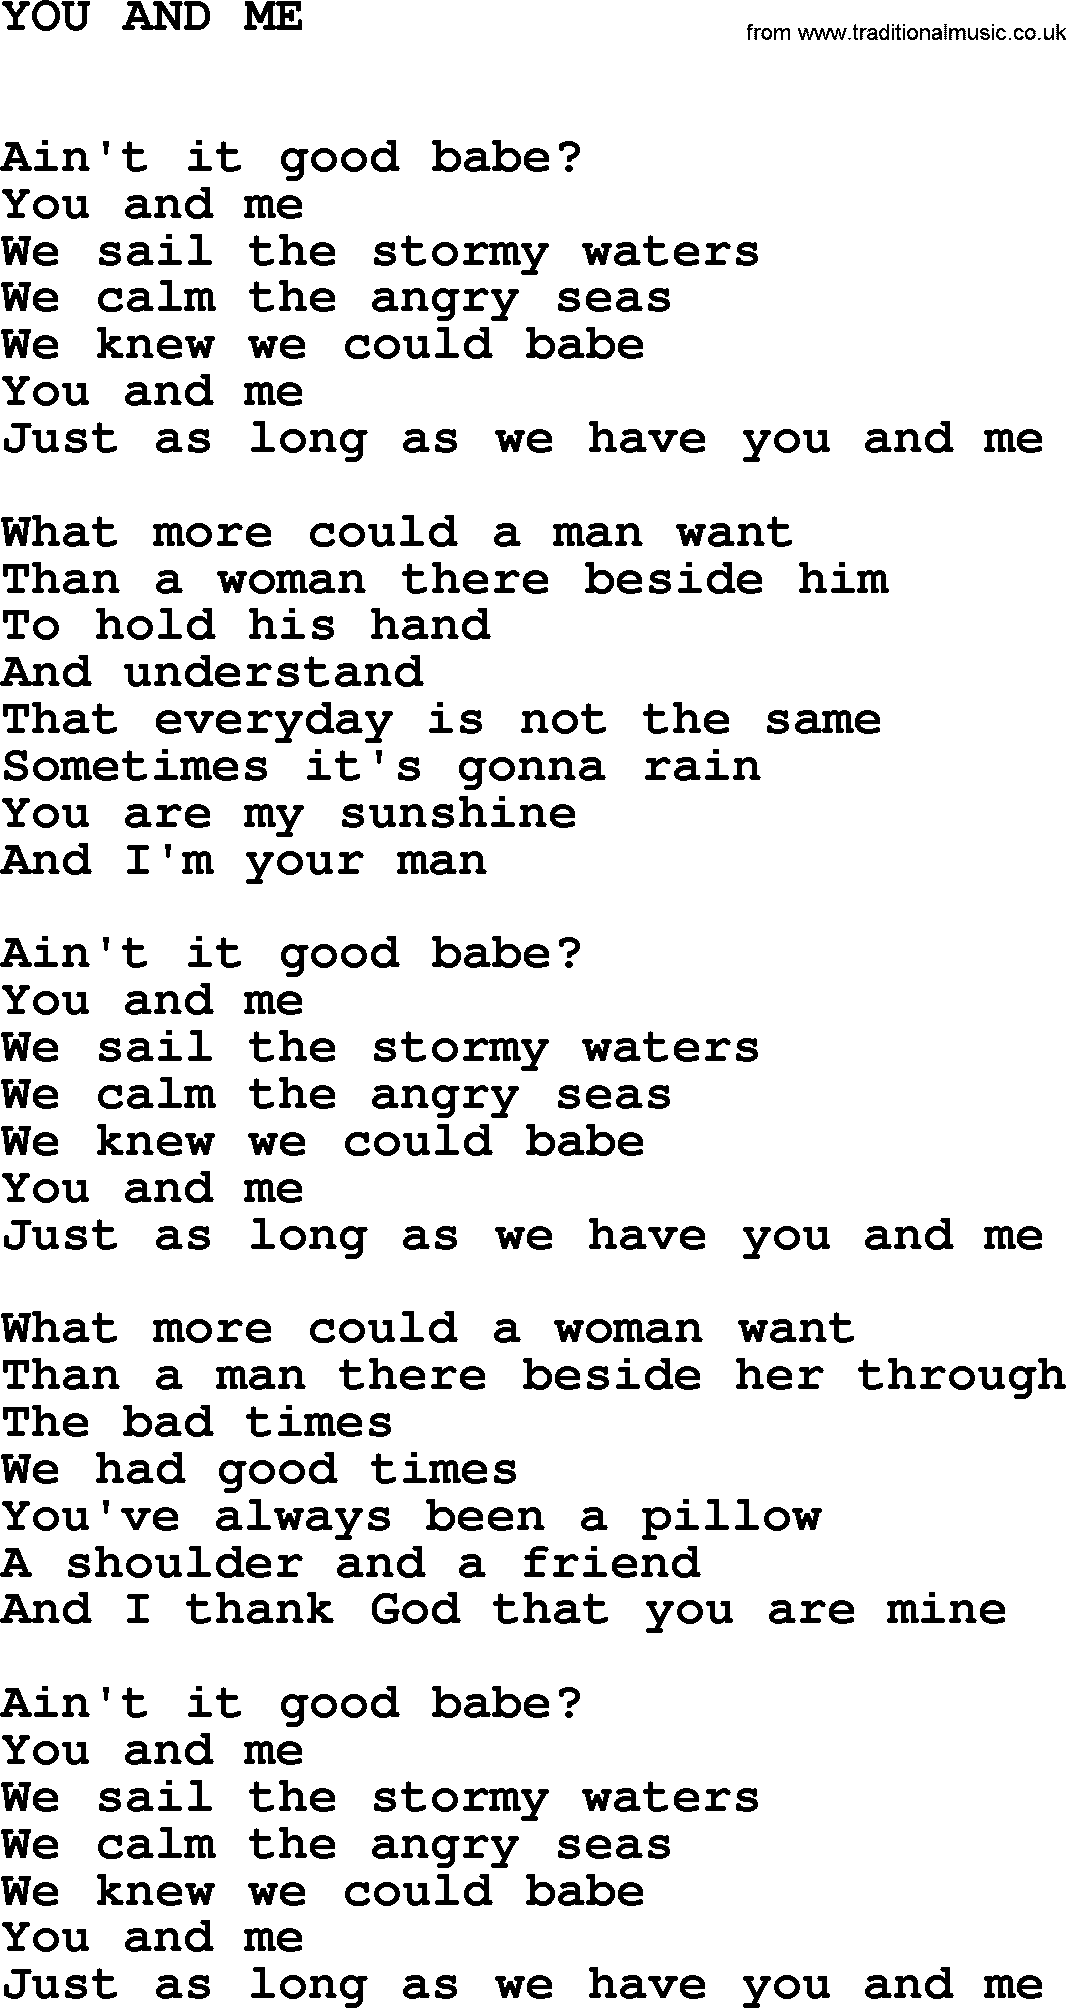 Johnny Cash song You And Me.txt lyrics